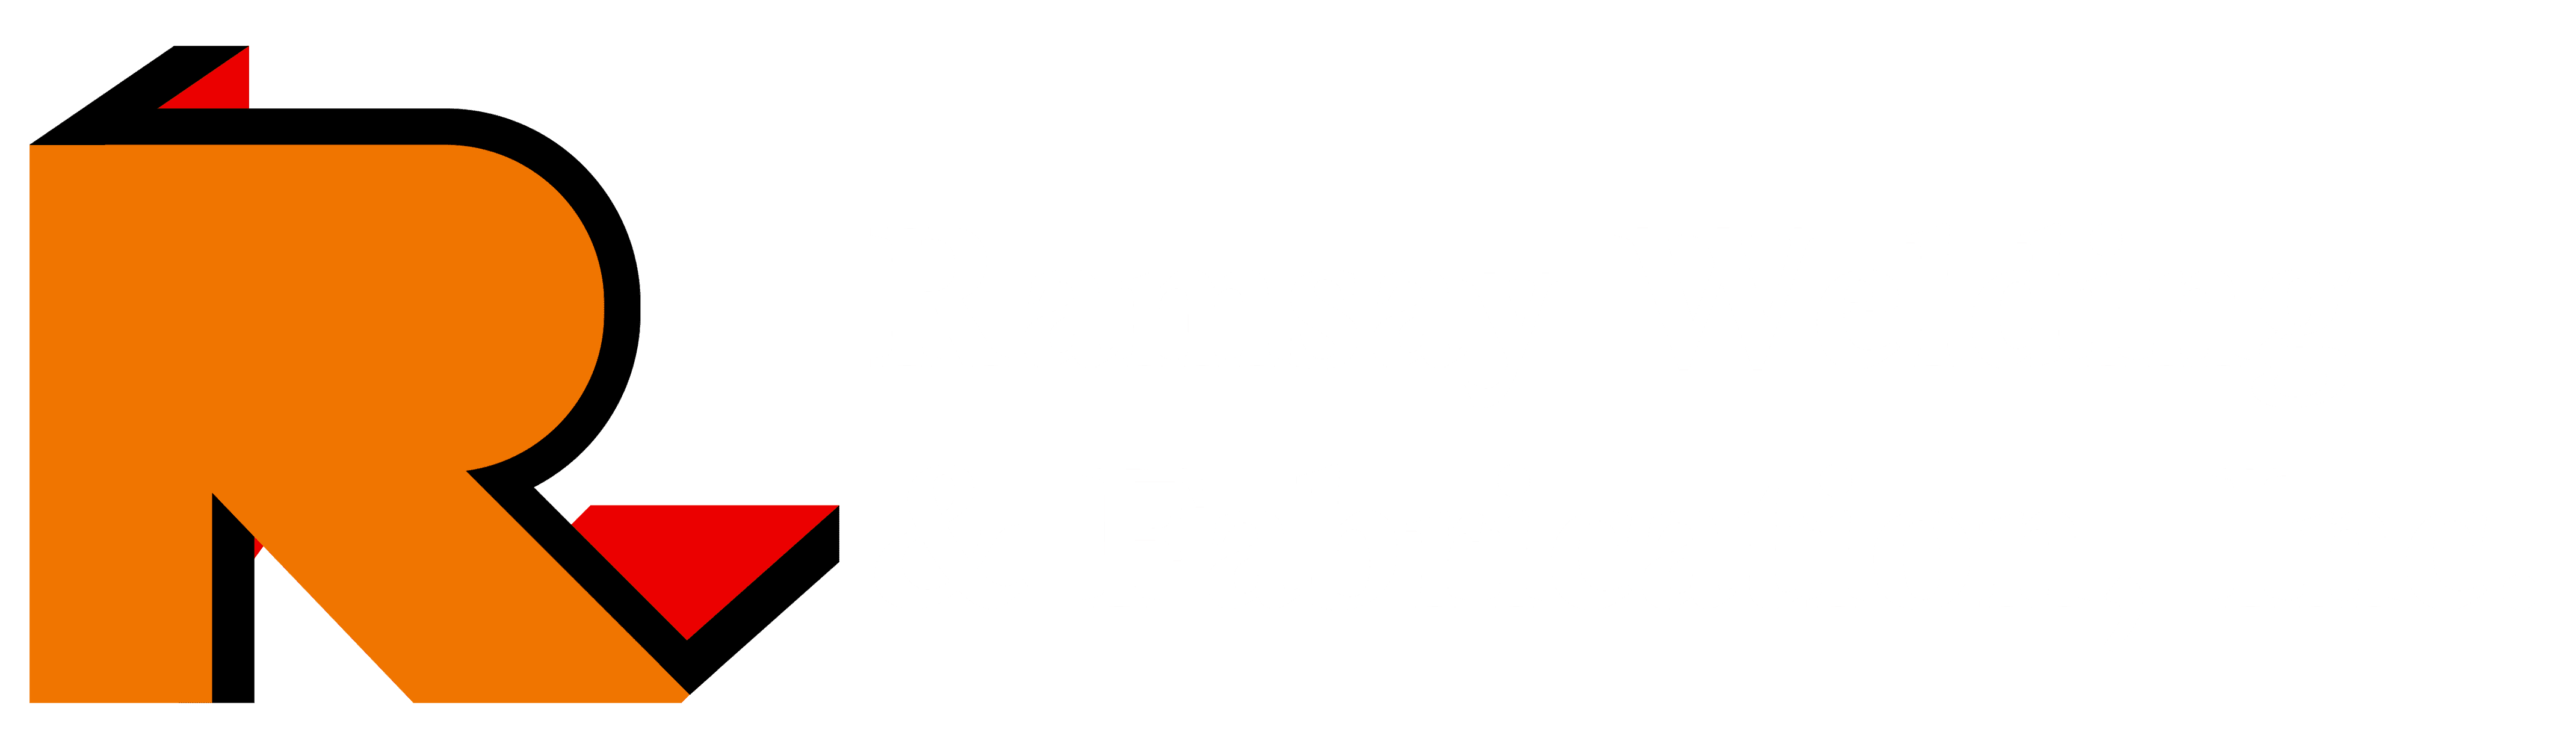 Ramsay Welding & Fabrication, Inc.